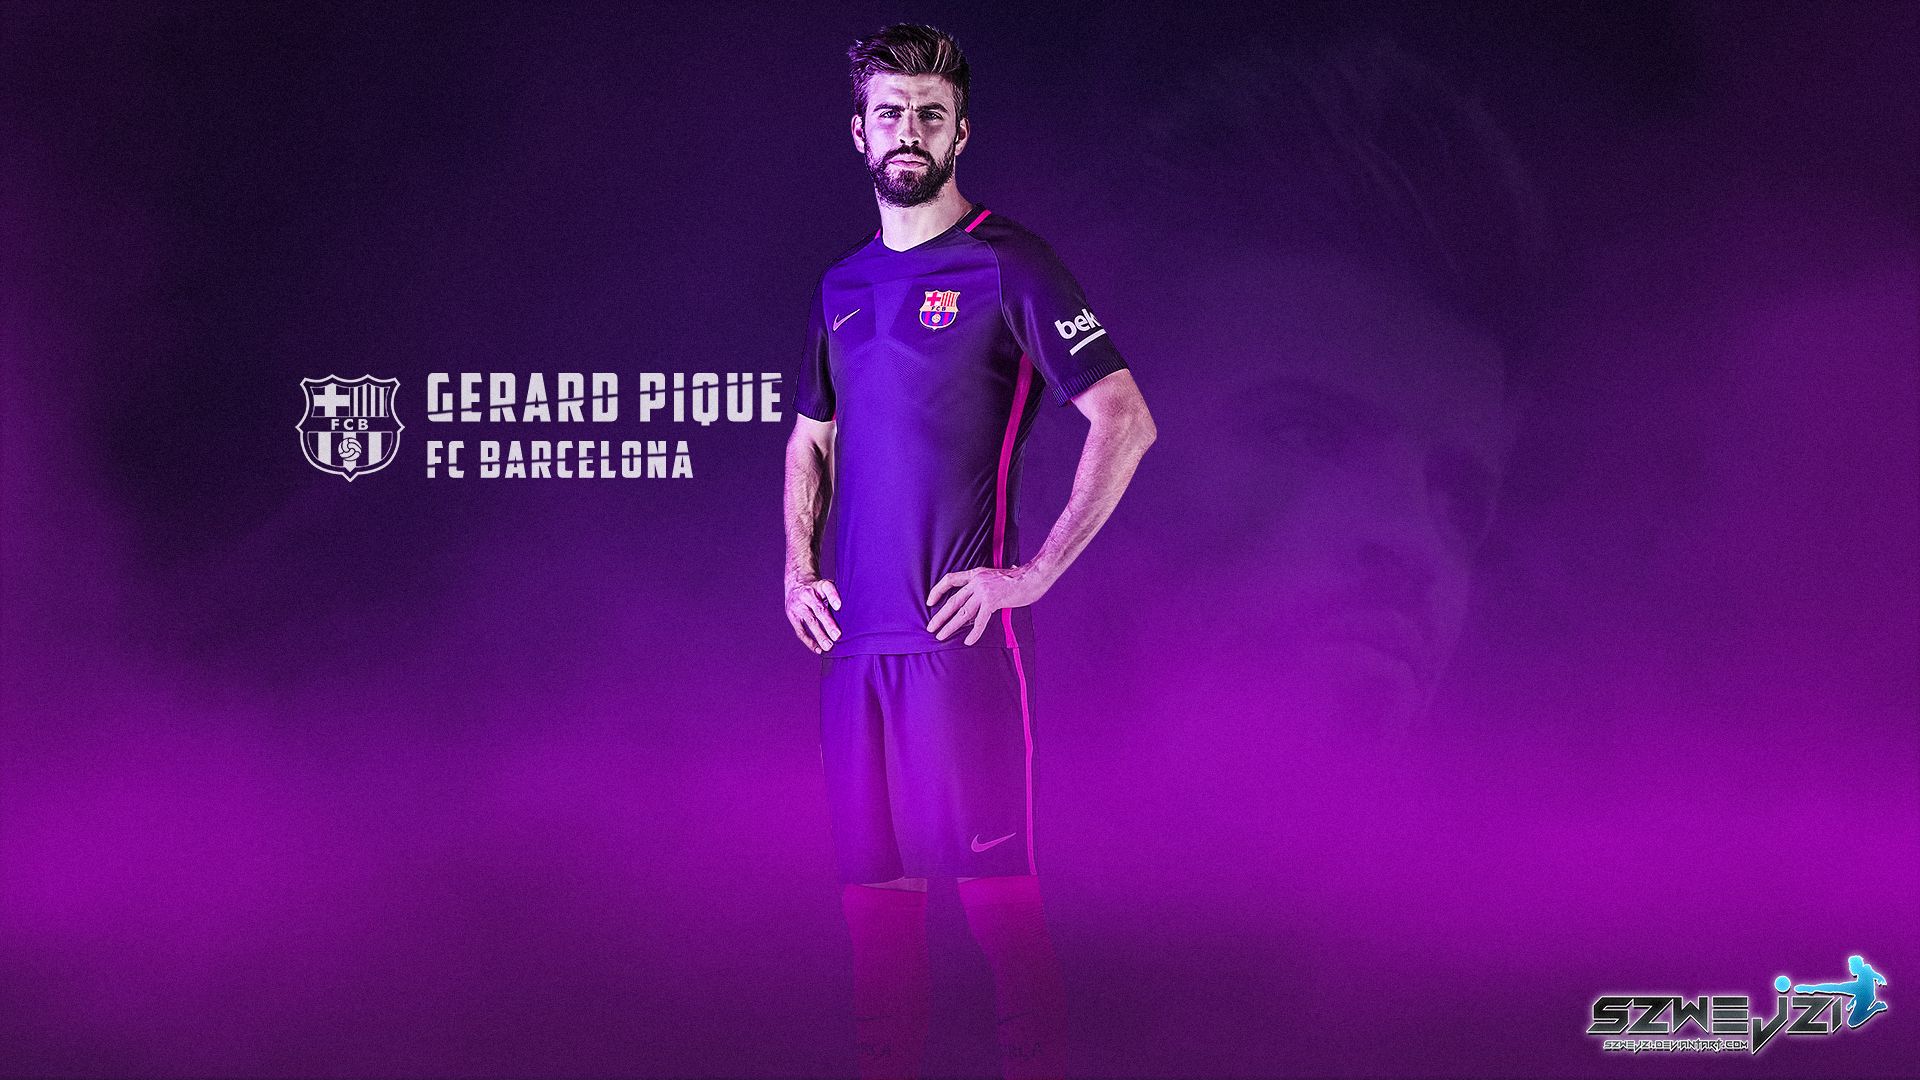 Descarga gratuita de fondo de pantalla para móvil de Fútbol, Deporte, Fc Barcelona, Gerard Piqué.